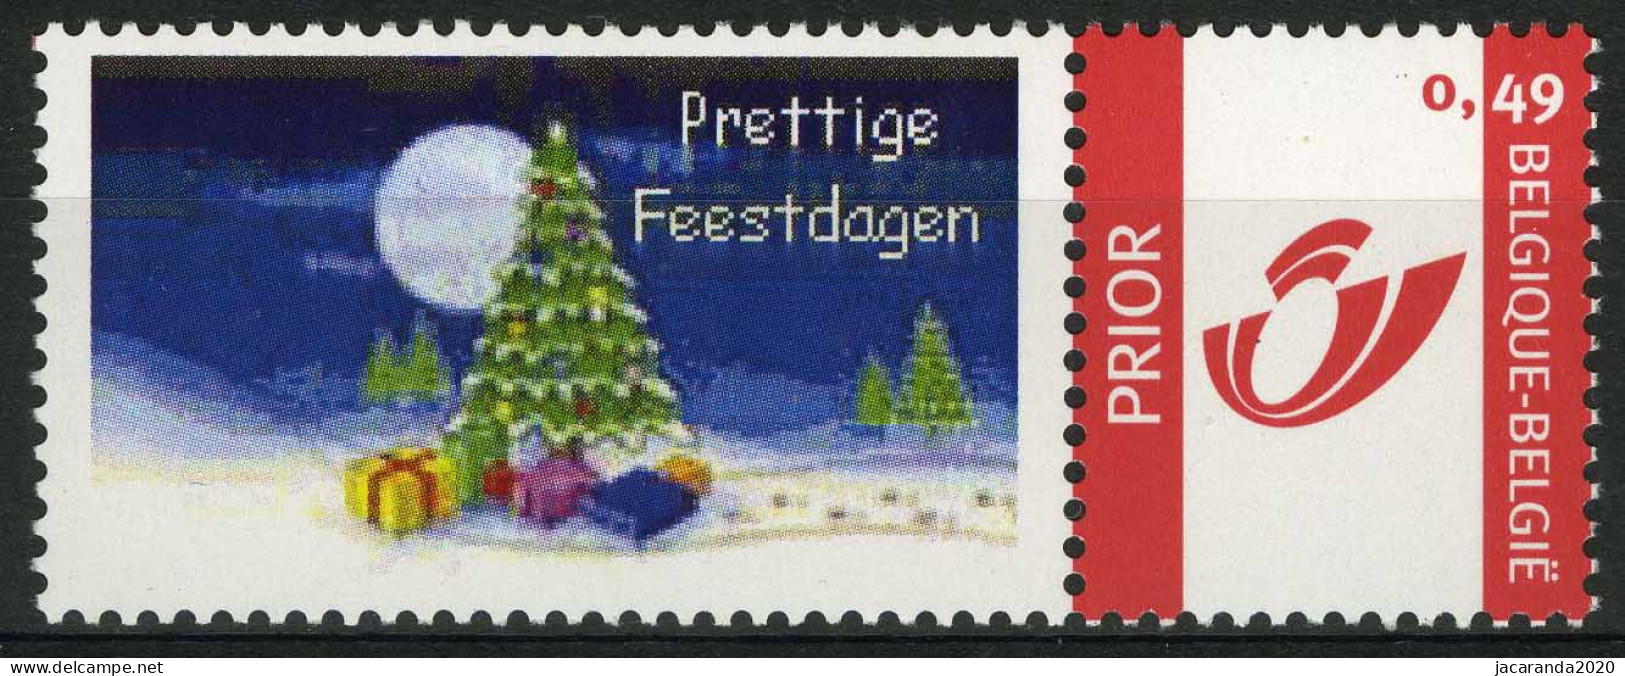 België 3183 - Duostamp - Prettige Feestdagen - Kerstboom - Mint